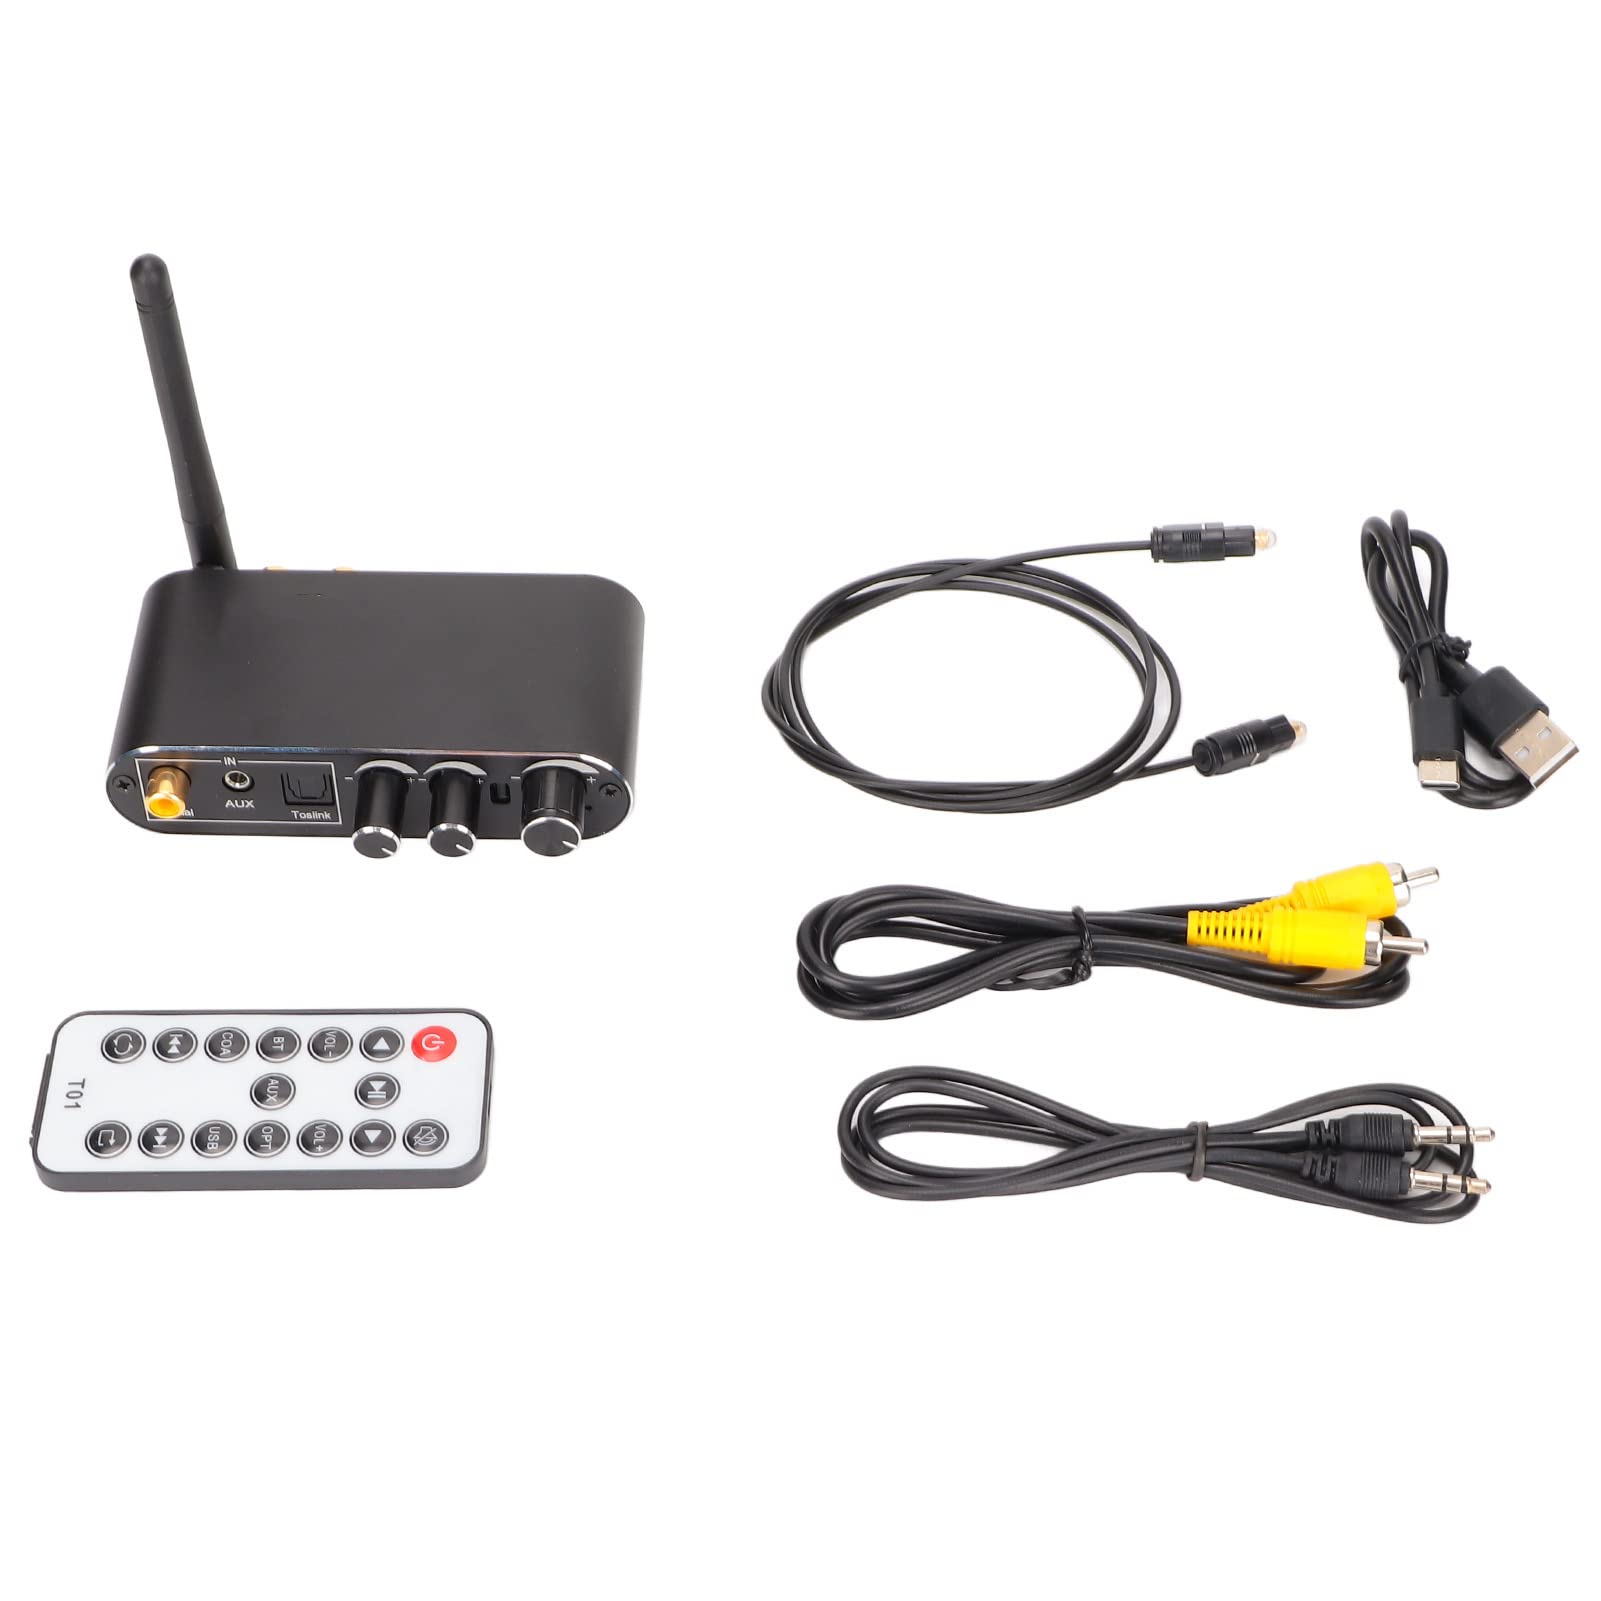 Digital-zu-Analog-Audio-Konverter mit Bluetooth 5.0, 2 Geräte Verbinden DAC-Konverter Unterstützt 3,5-mm-Anschluss, Audio-Adapter Unterstützt Lautstärkeregelung Musikumschaltung